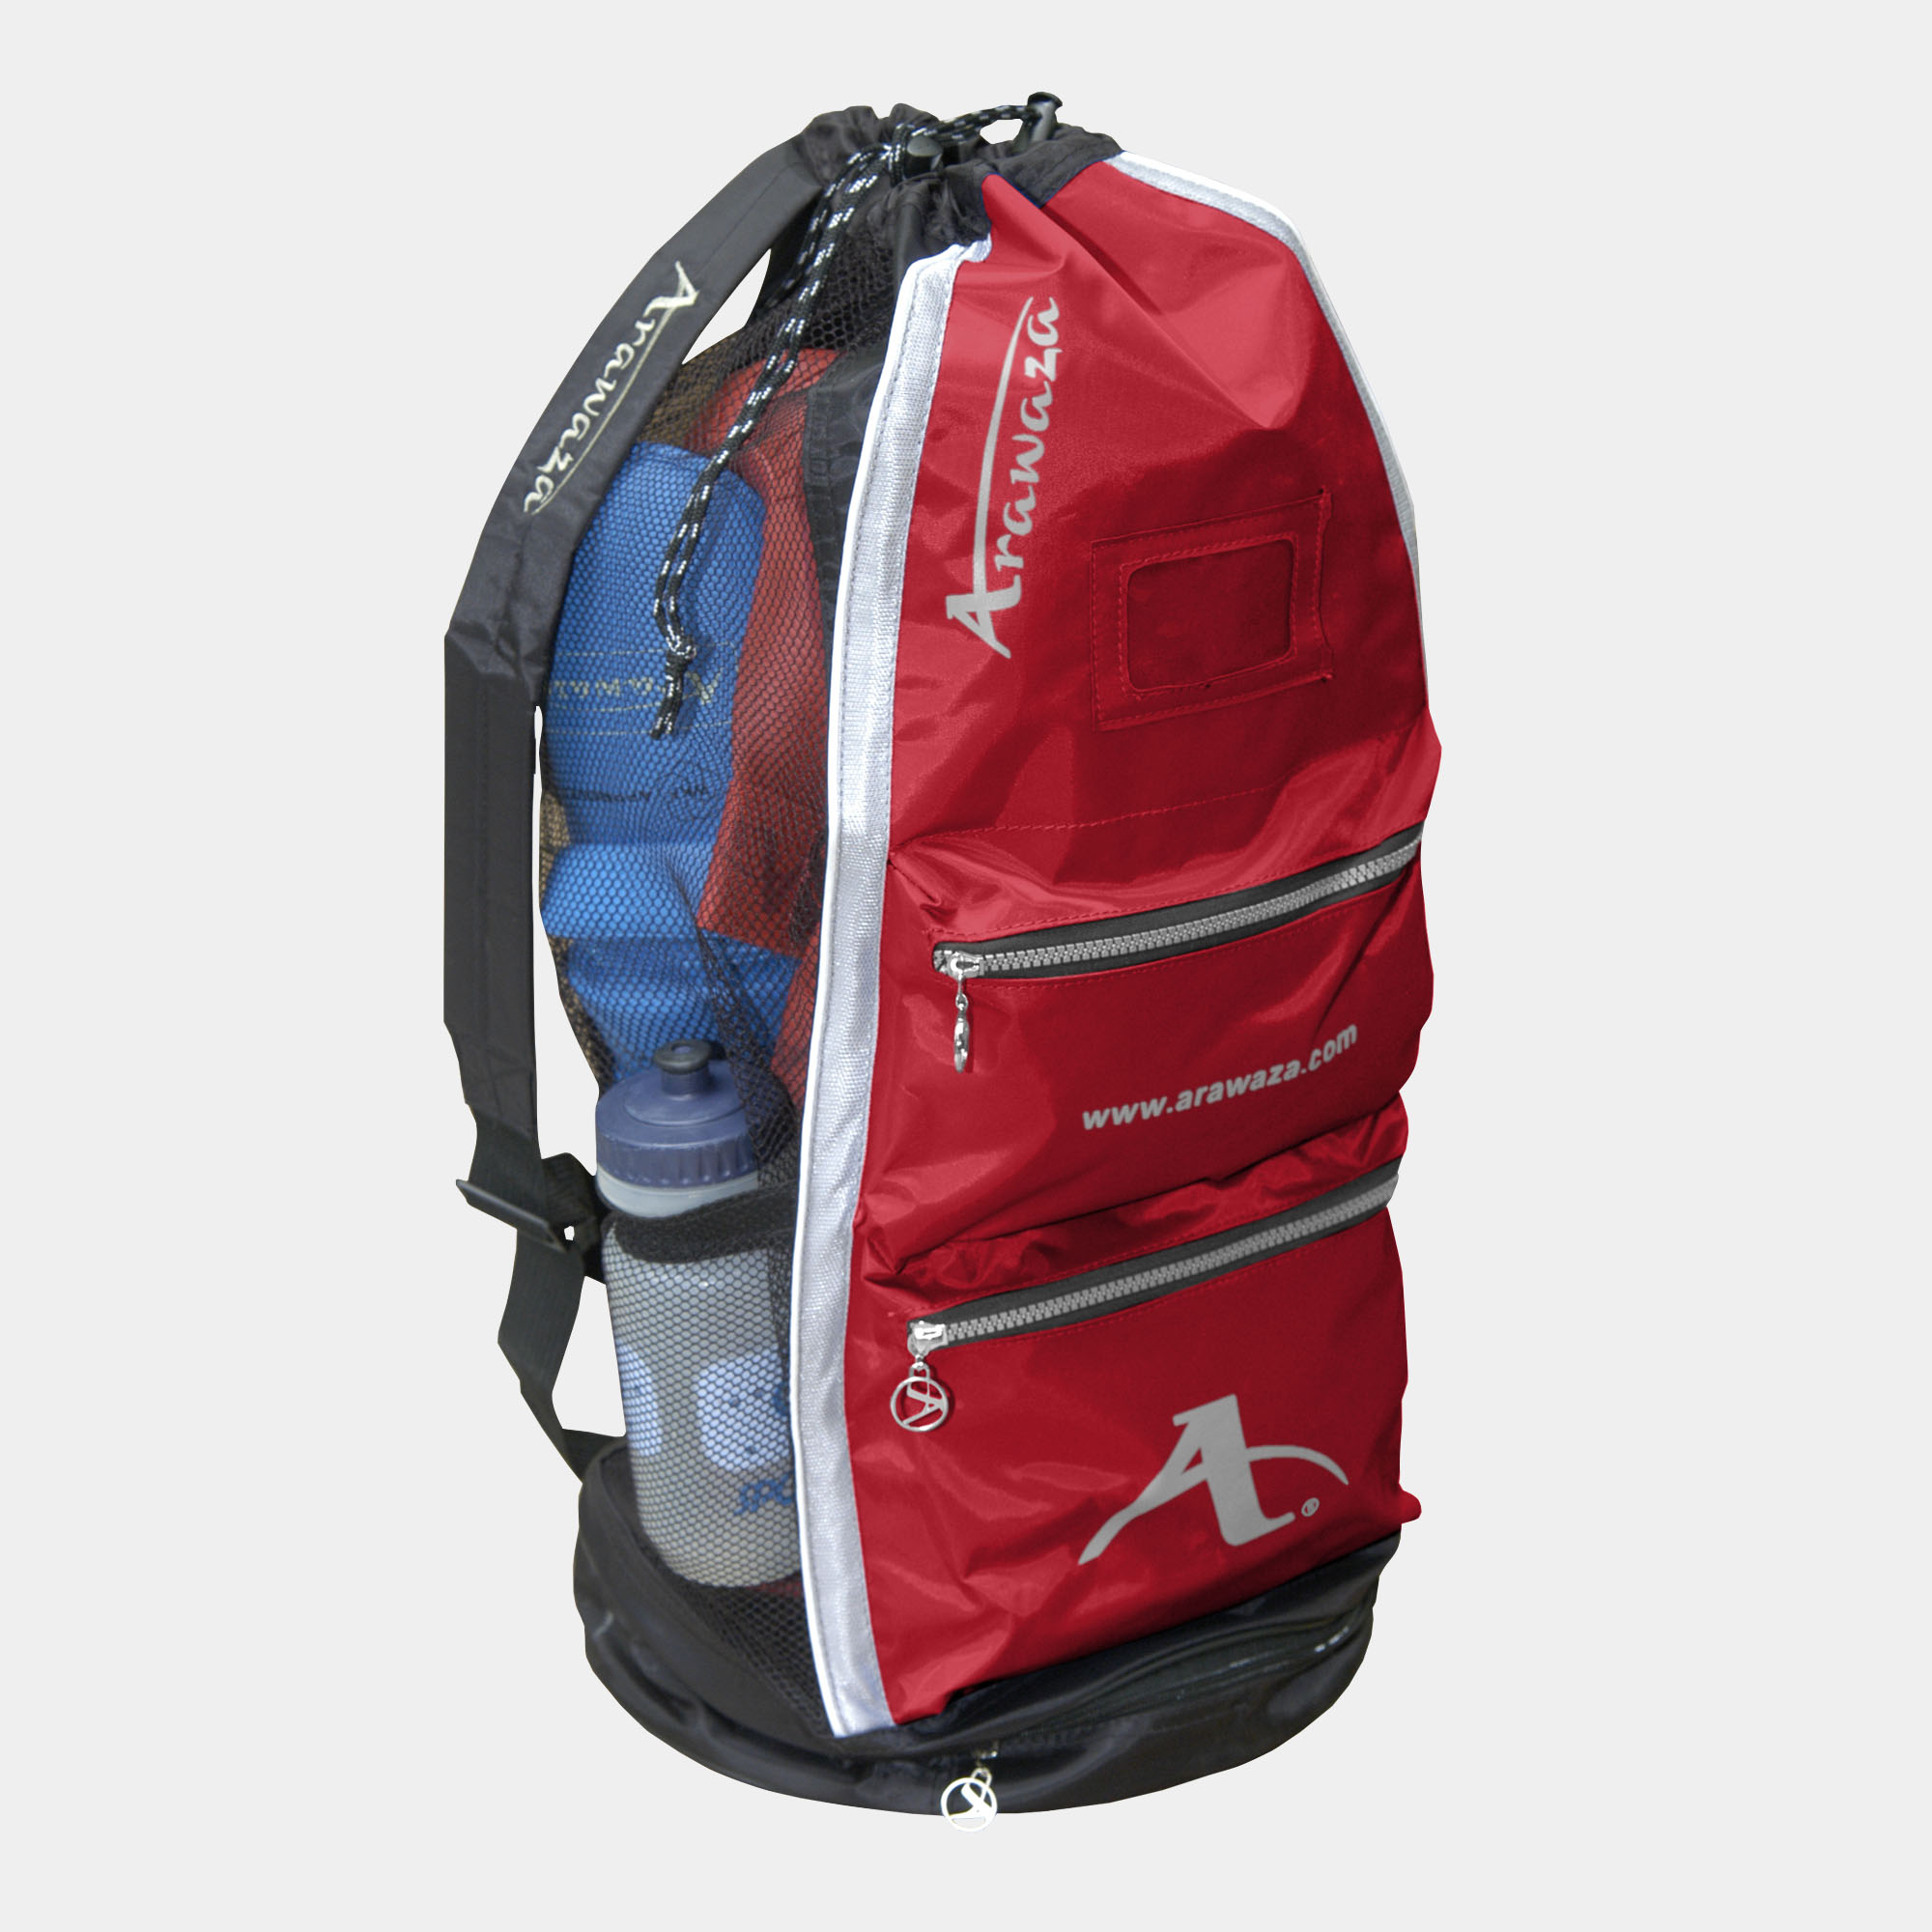 Arawaza Gear Bag - Arawaza®